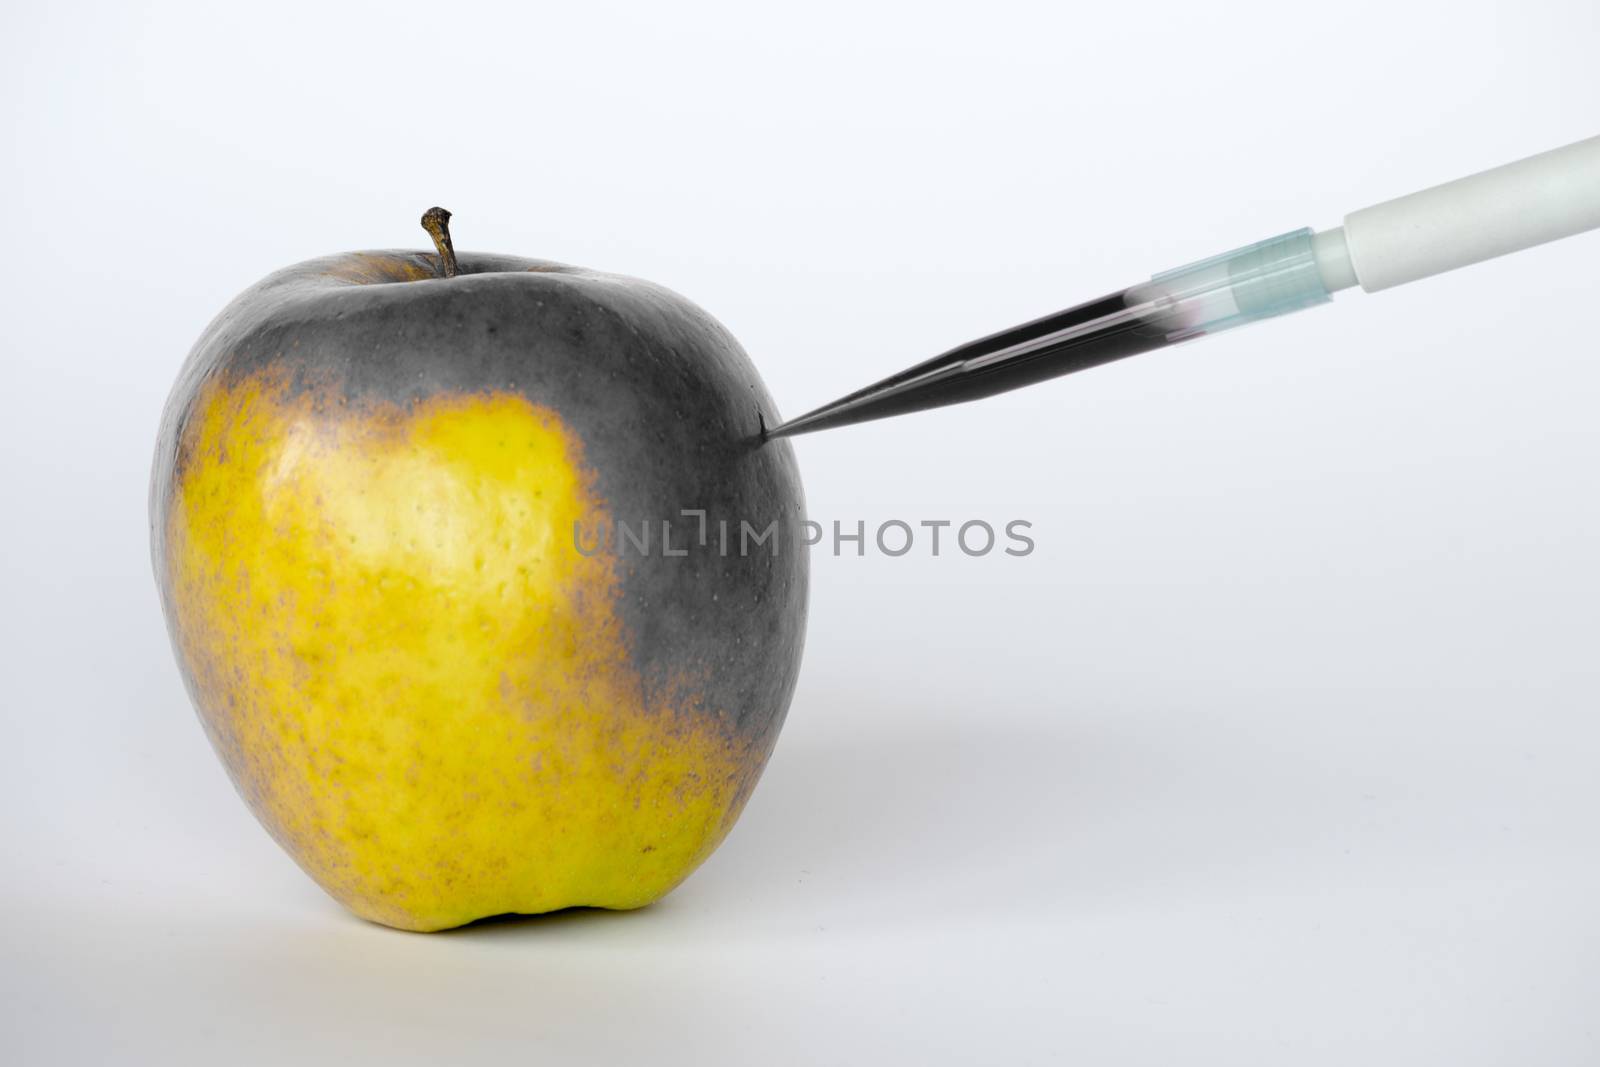 Killing an yellow apple by rmbarricarte